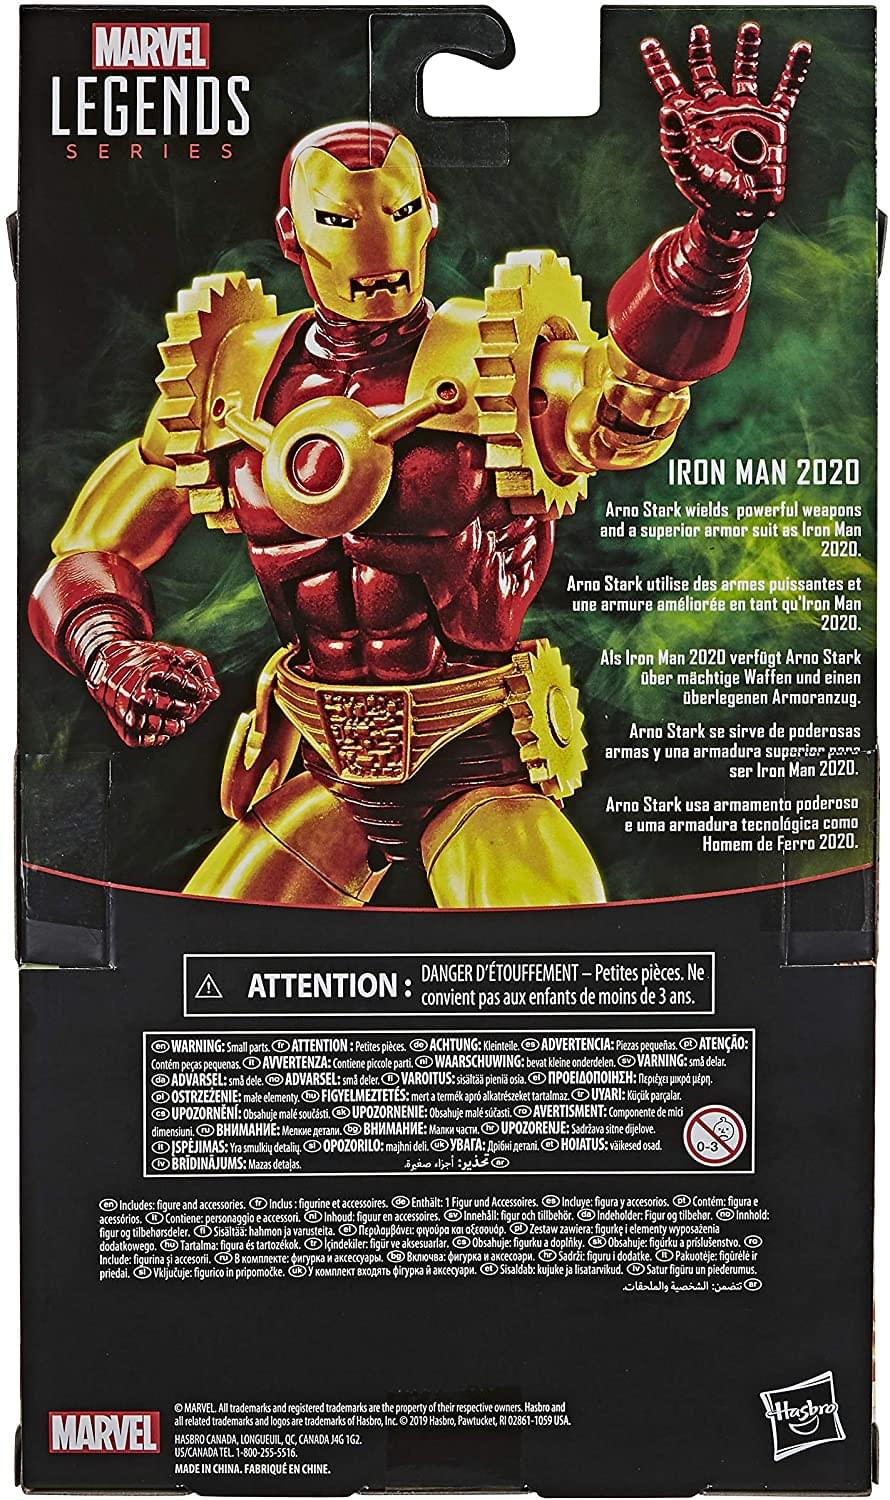 Marvel Legends 6 Inch Action Figure | Iron Man 2020